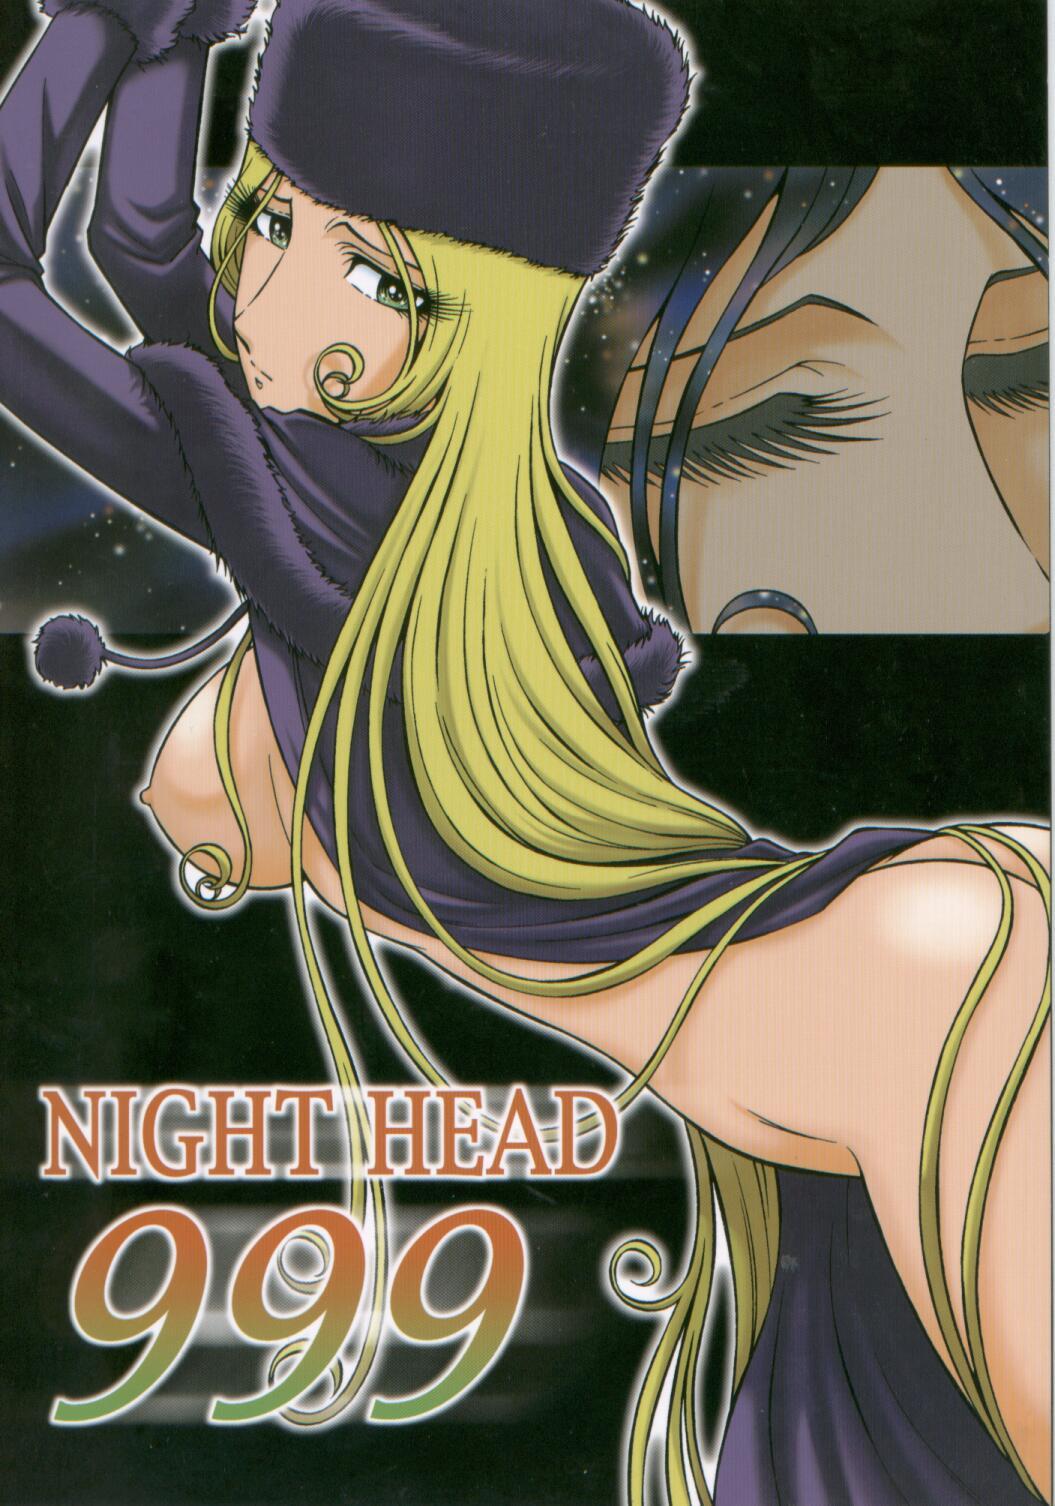 NIGHT HEAD 999 0